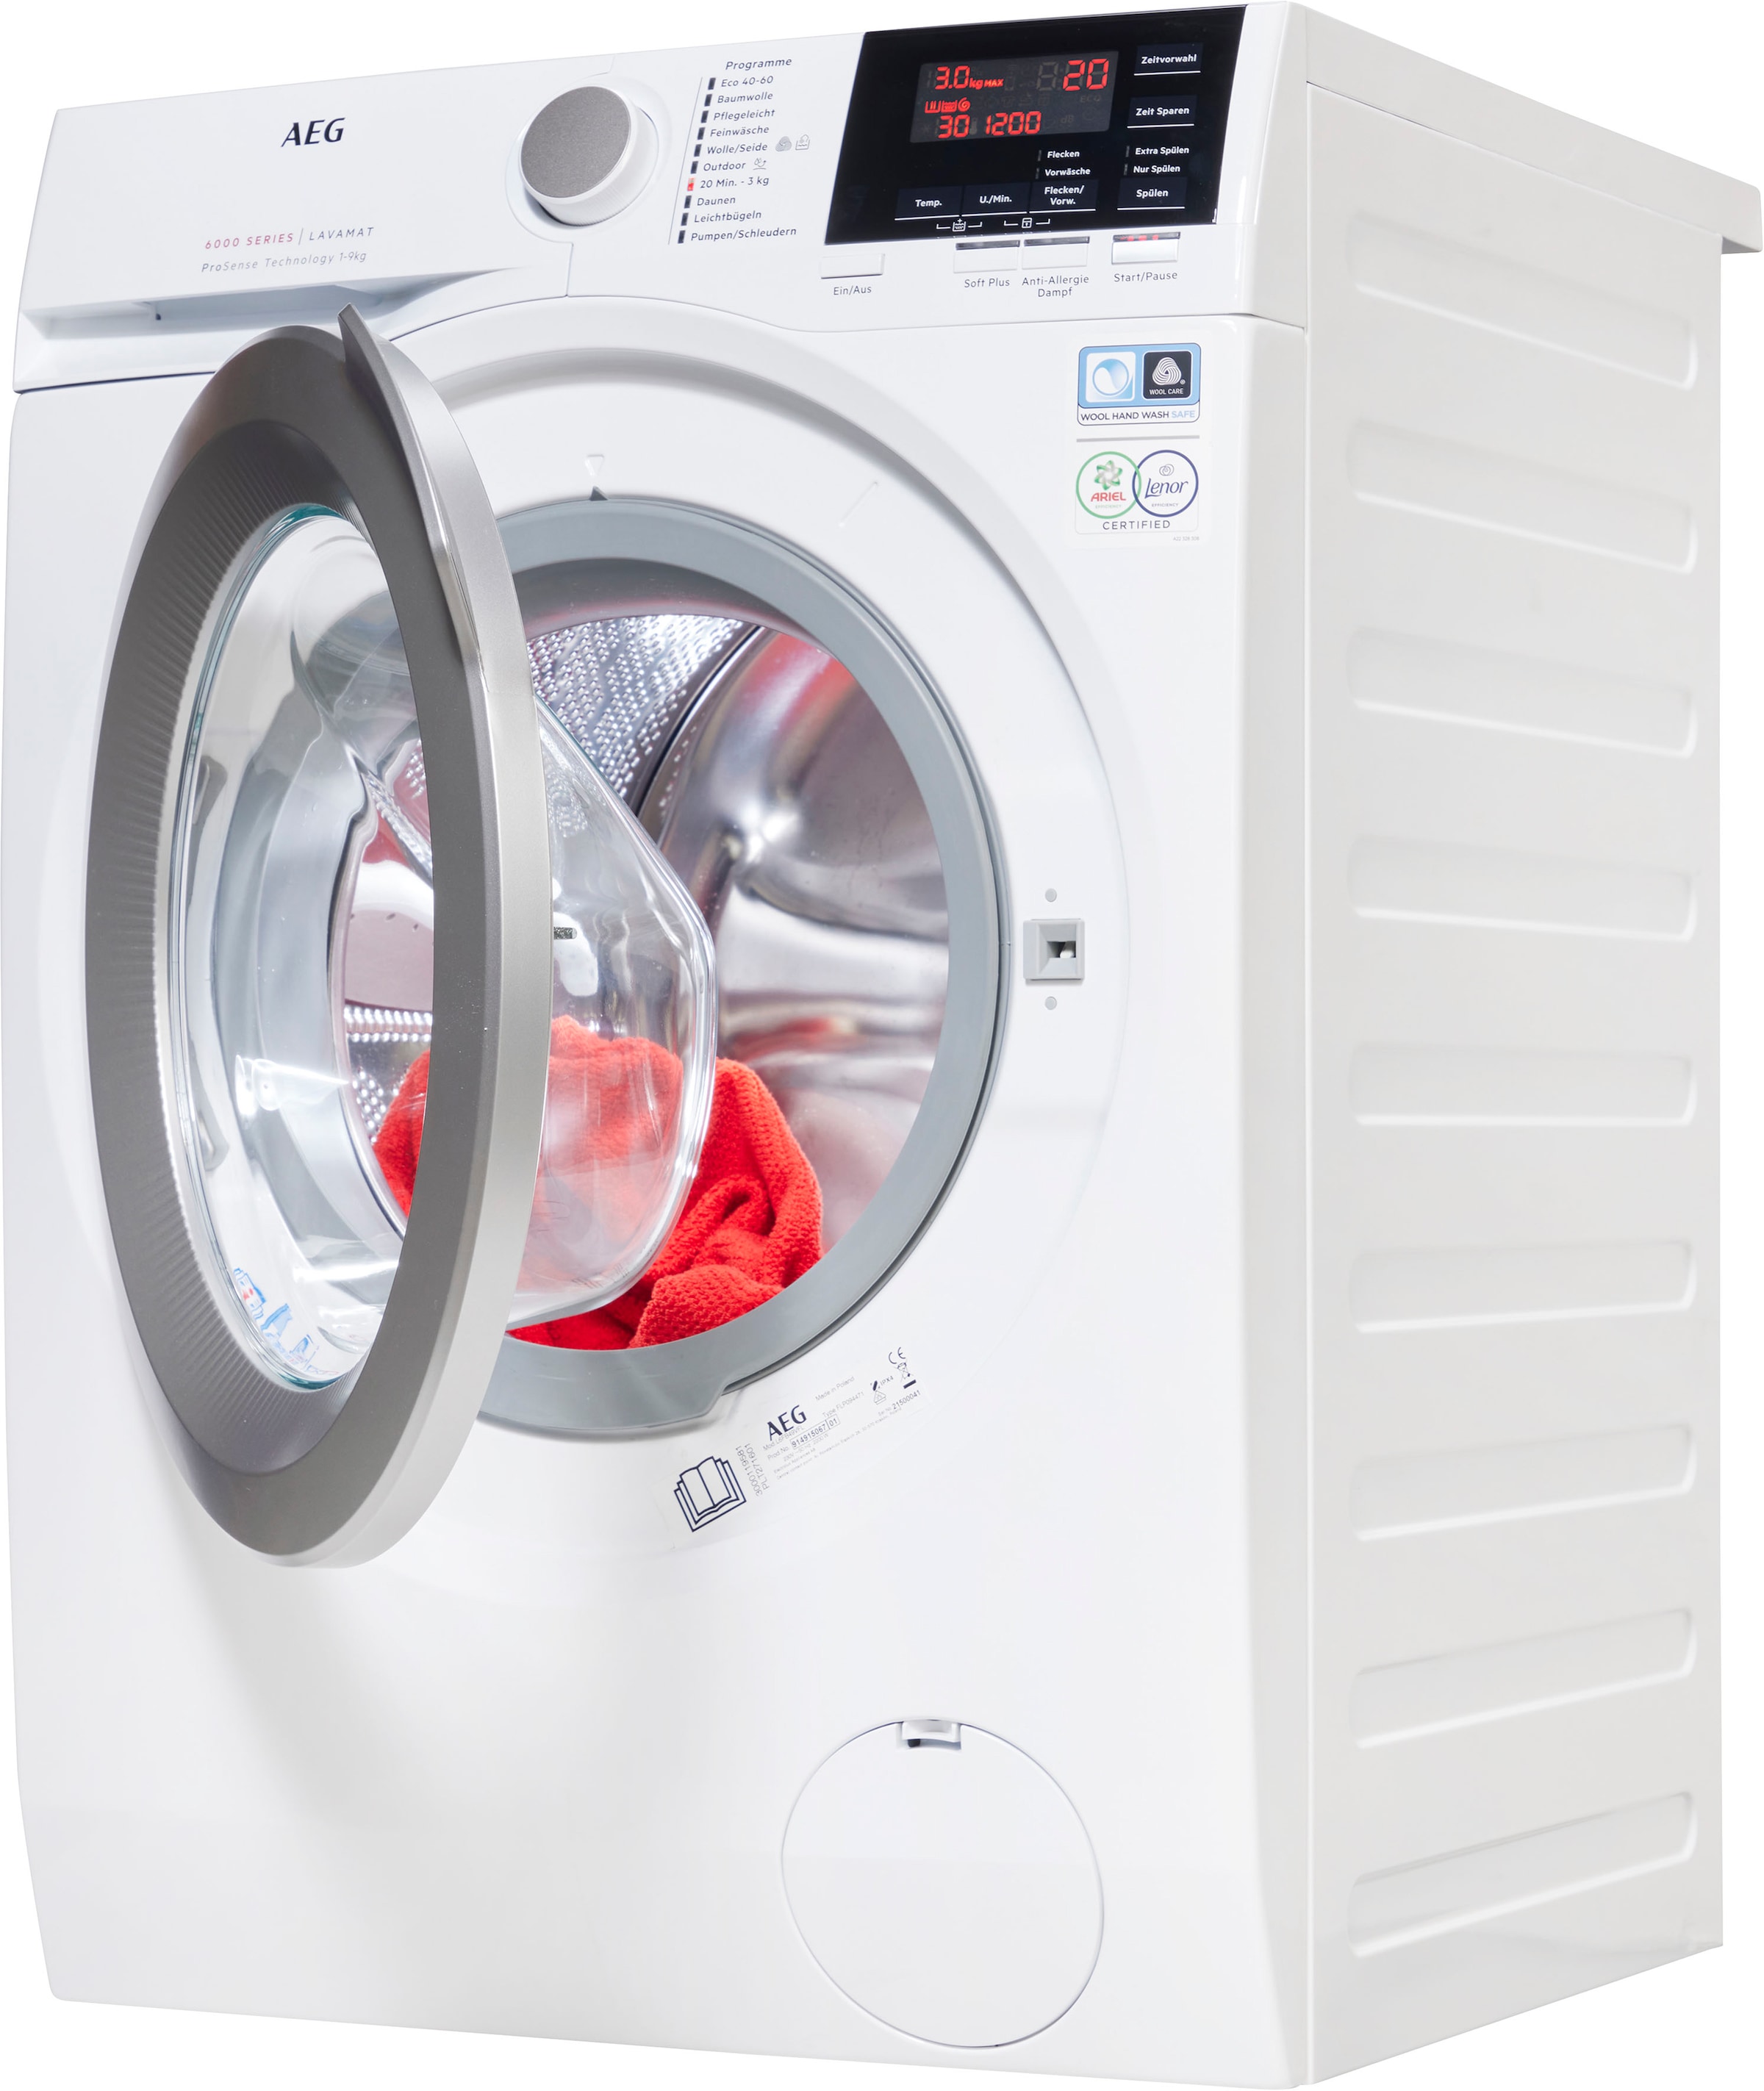 Dampf Hygiene-/ kg, Friday Waschmaschine U/min, BAUR Serie AEG Black mit 6000, L6FB49VFL, »L6FB49VFL«, Programm Anti-Allergie 1400 | 9